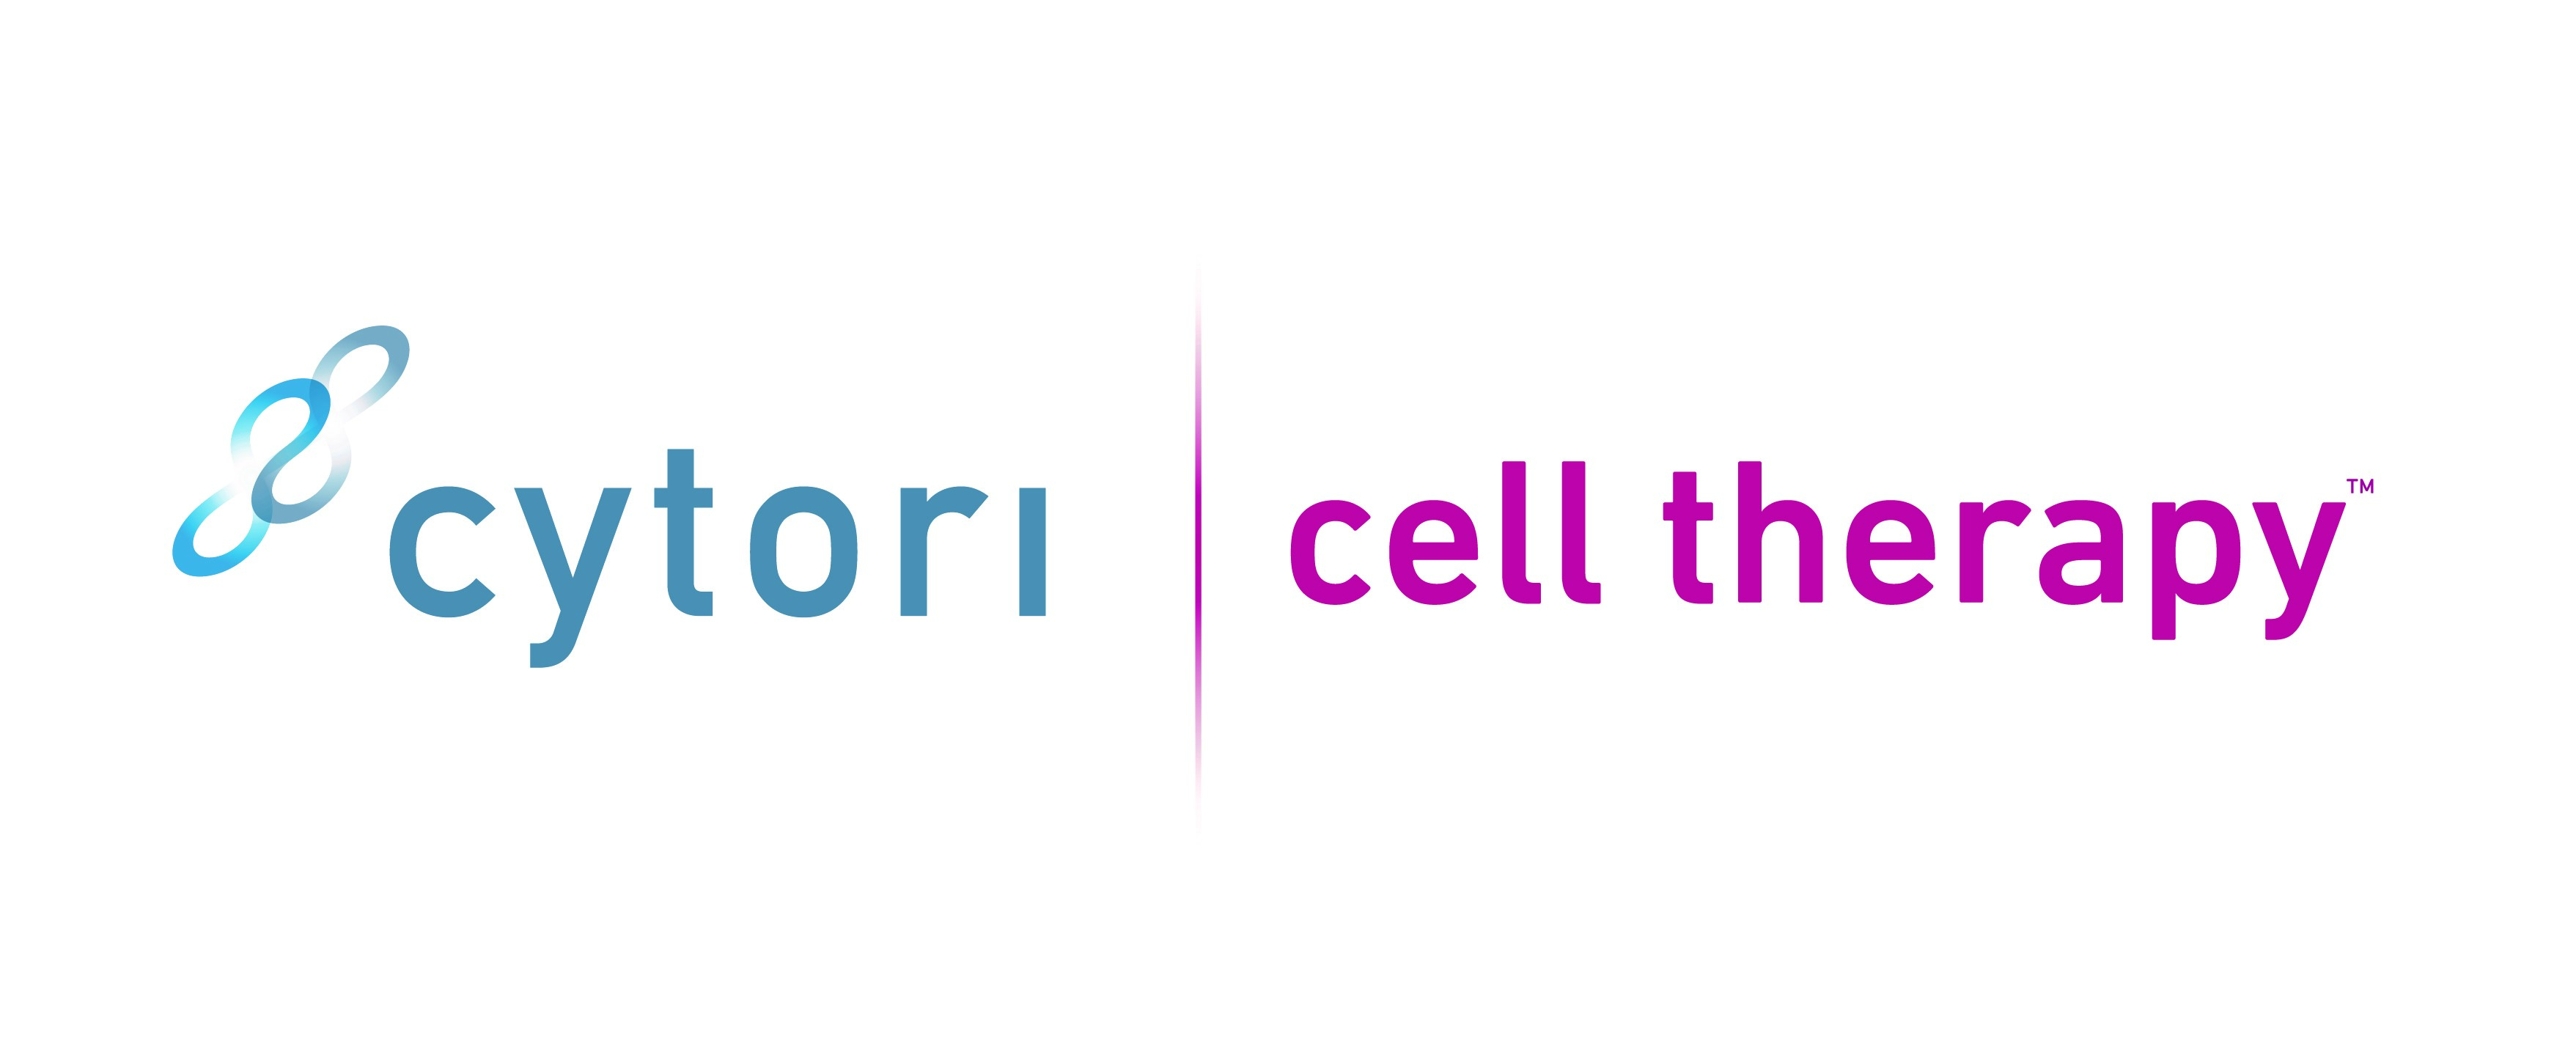 Therap Logo - cytori cell therapy logo - Cytori Therapeutics, Inc.